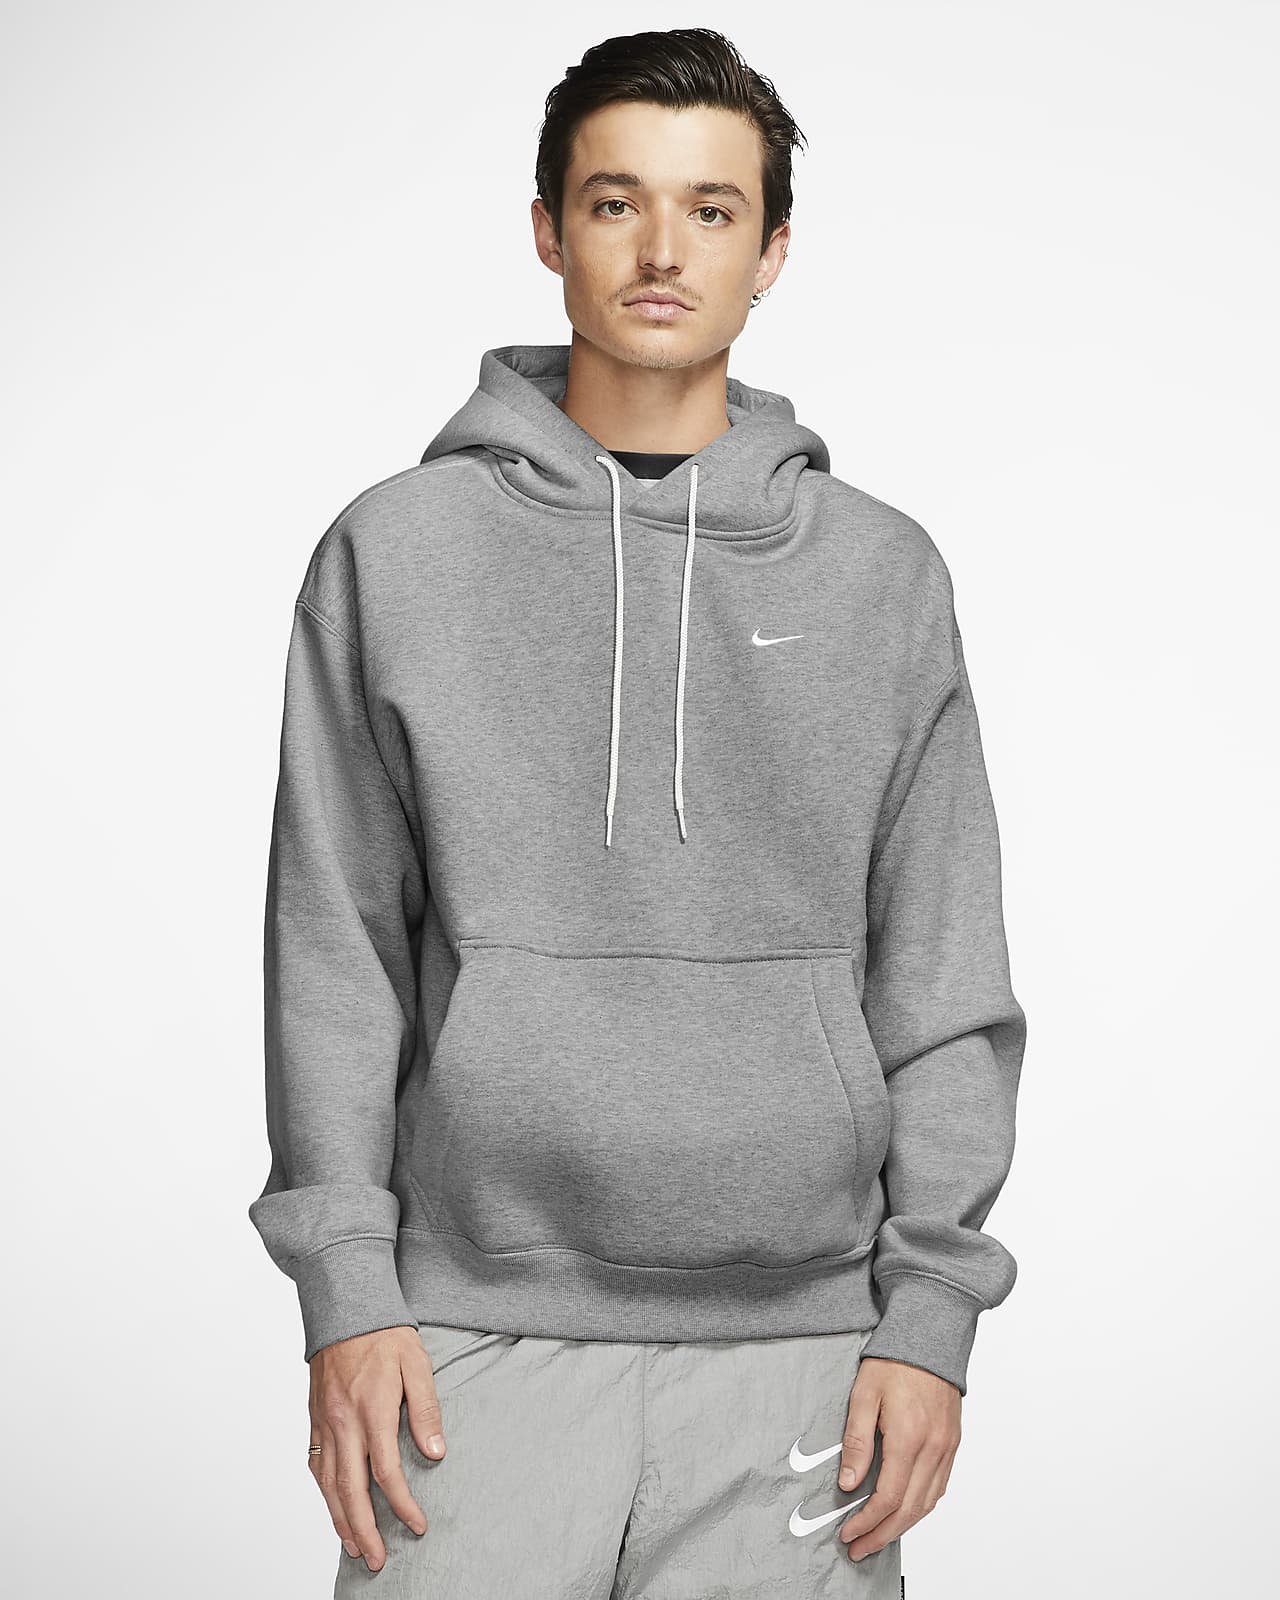 Nike公式 ナイキラボ メンズ フリース パーカー オンラインストア 通販サイト